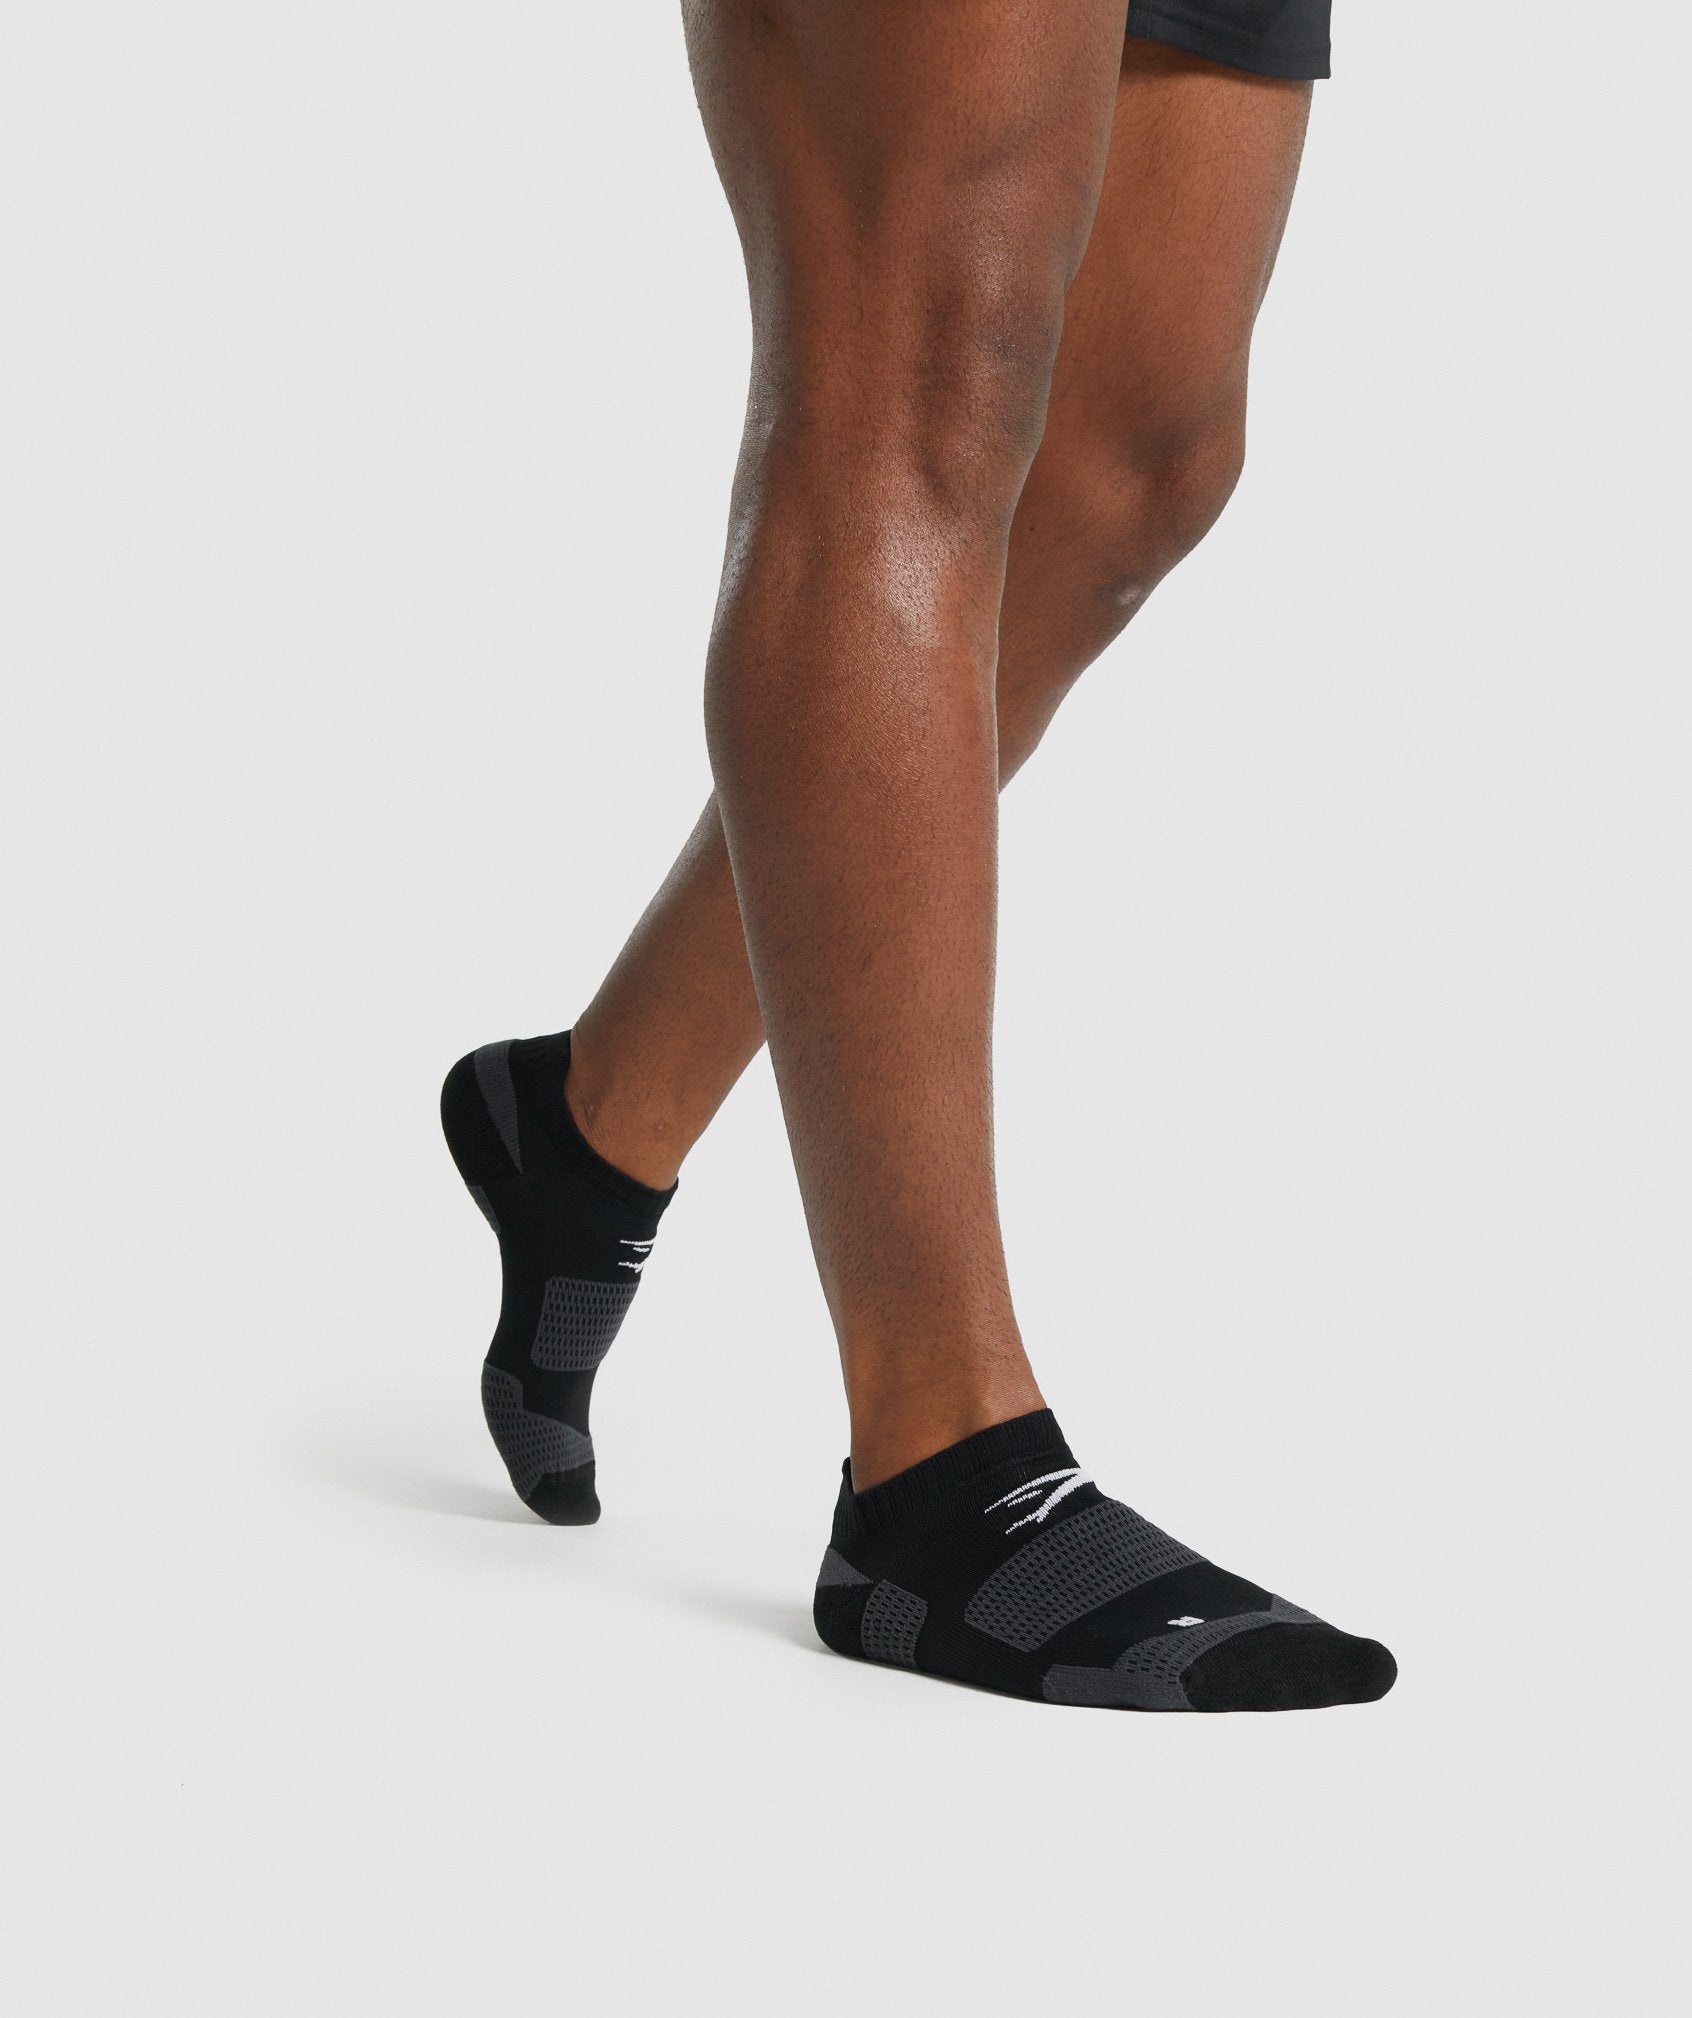 Ankle Performance Socks in Black